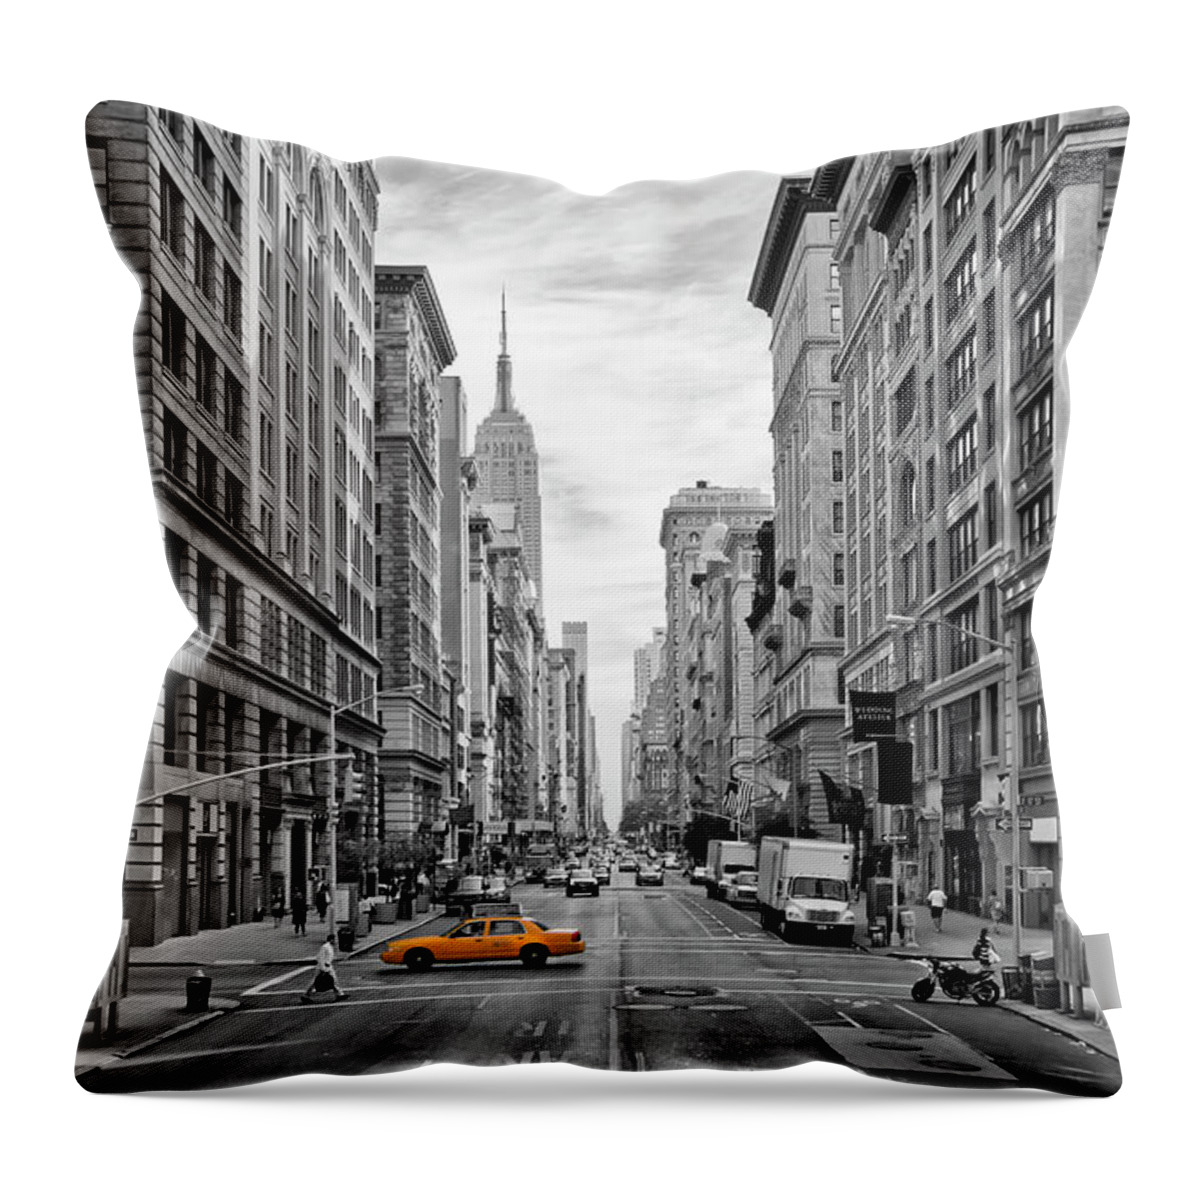 Fifth Avenue Throw Pillow featuring the photograph Urban 5th Avenue NYC by Melanie Viola